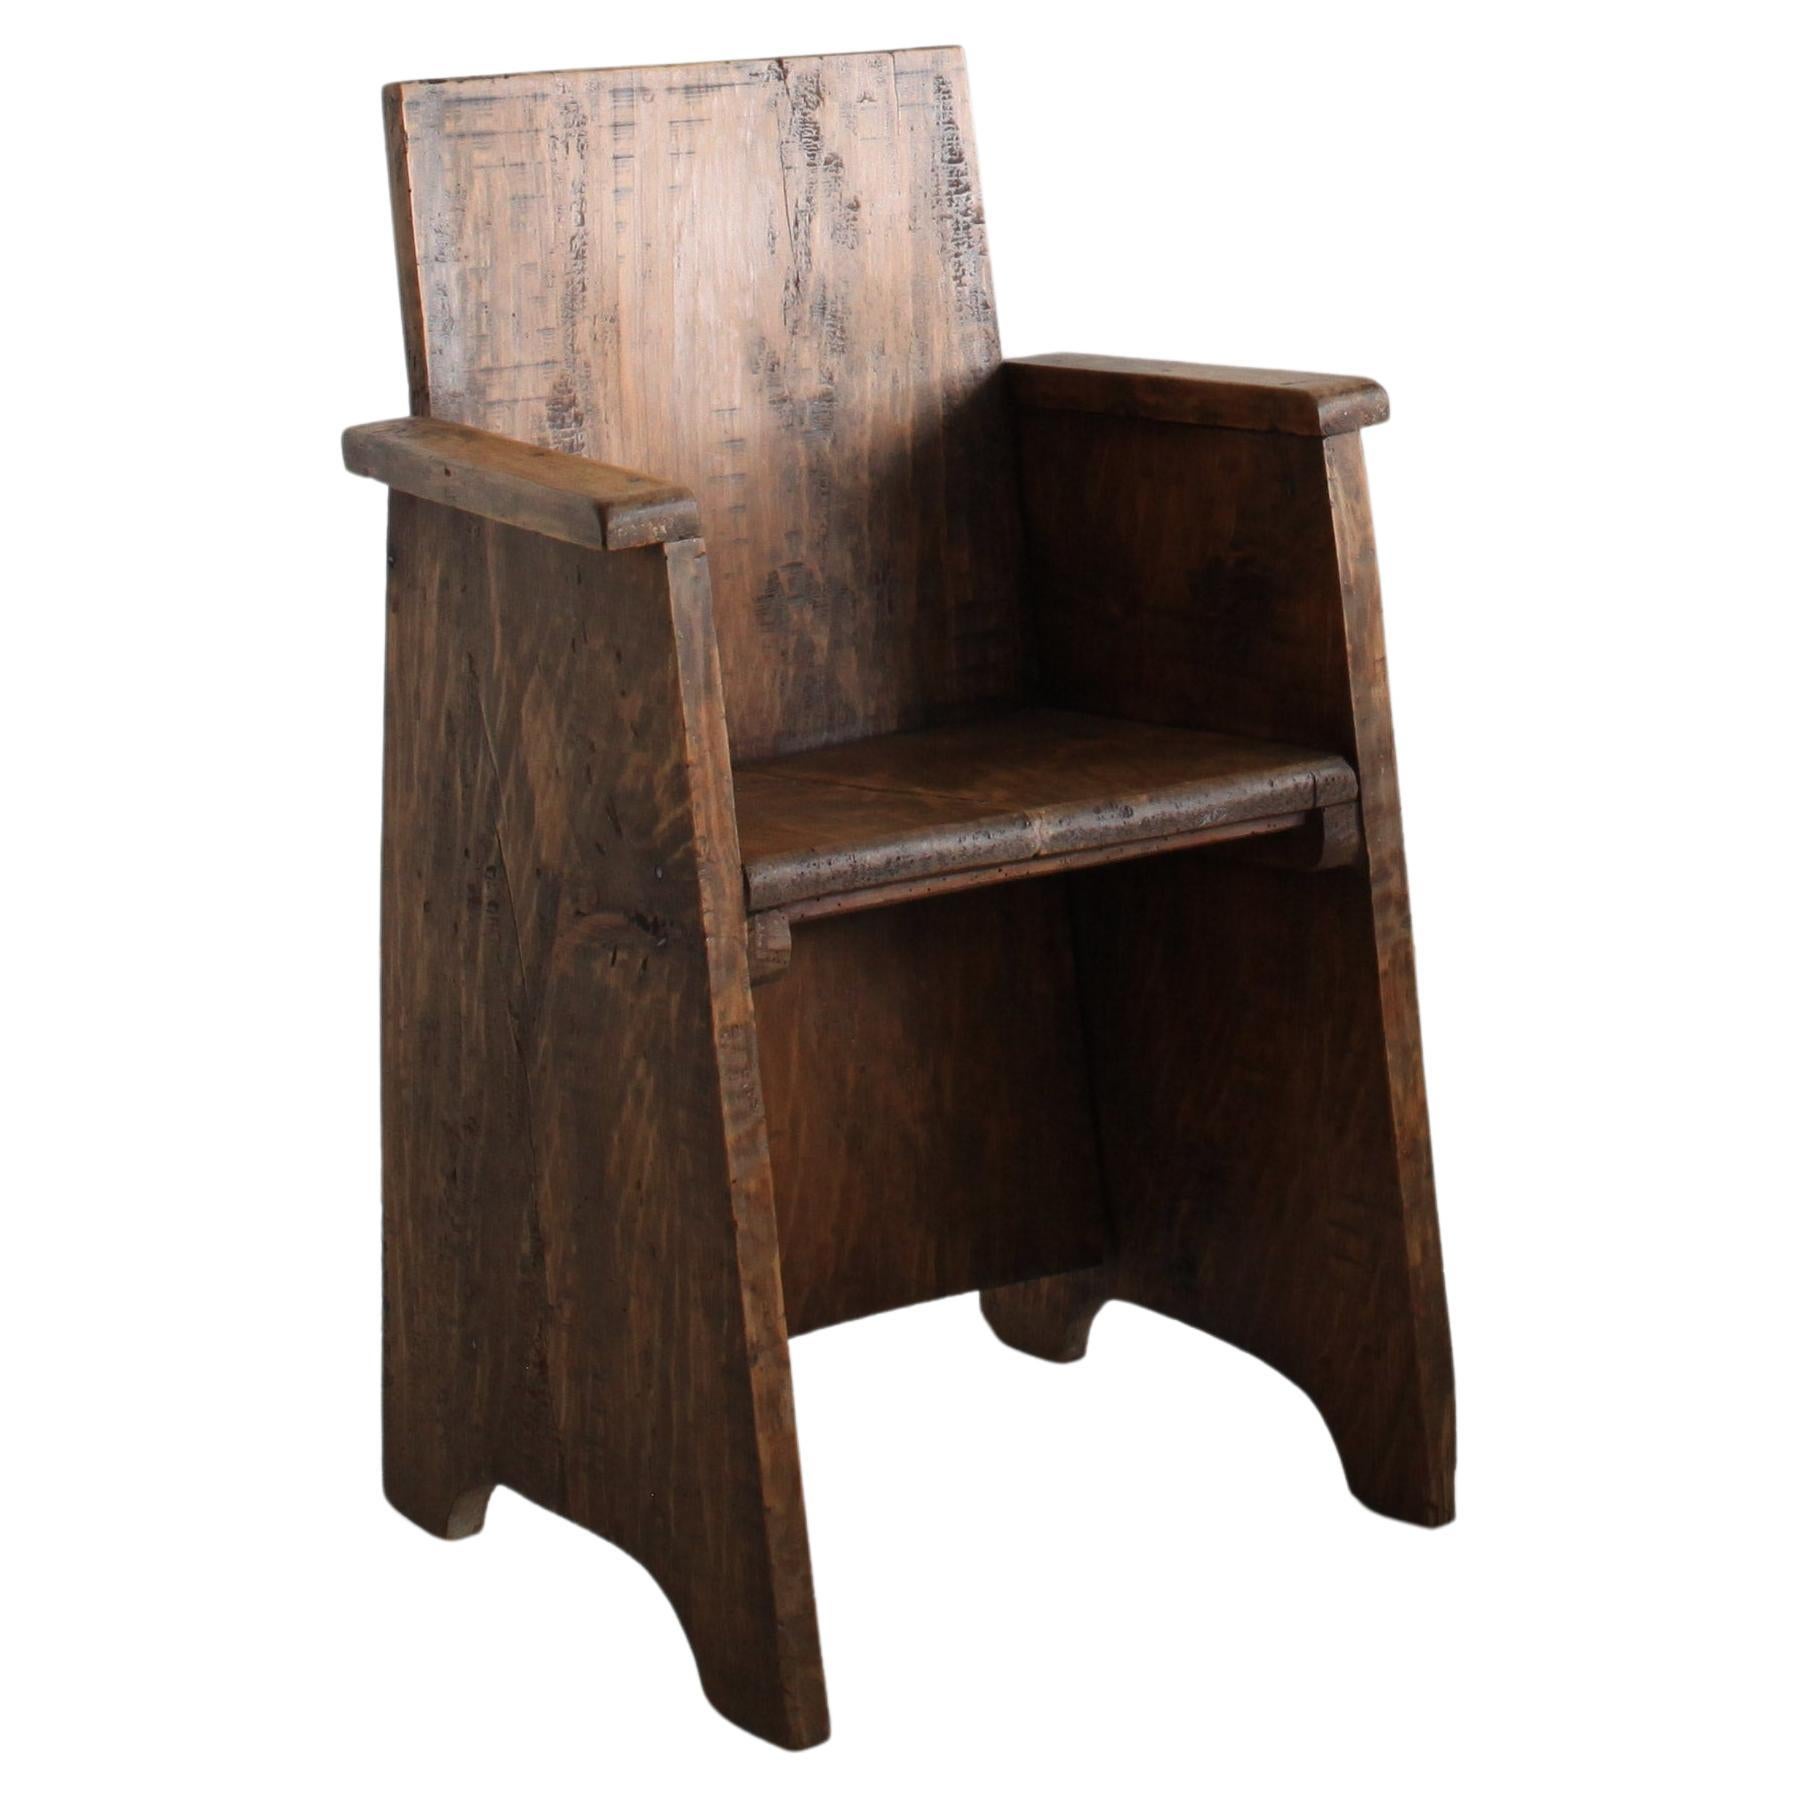 Sculptural Primitive French Folk Art Elm Chair For Sale